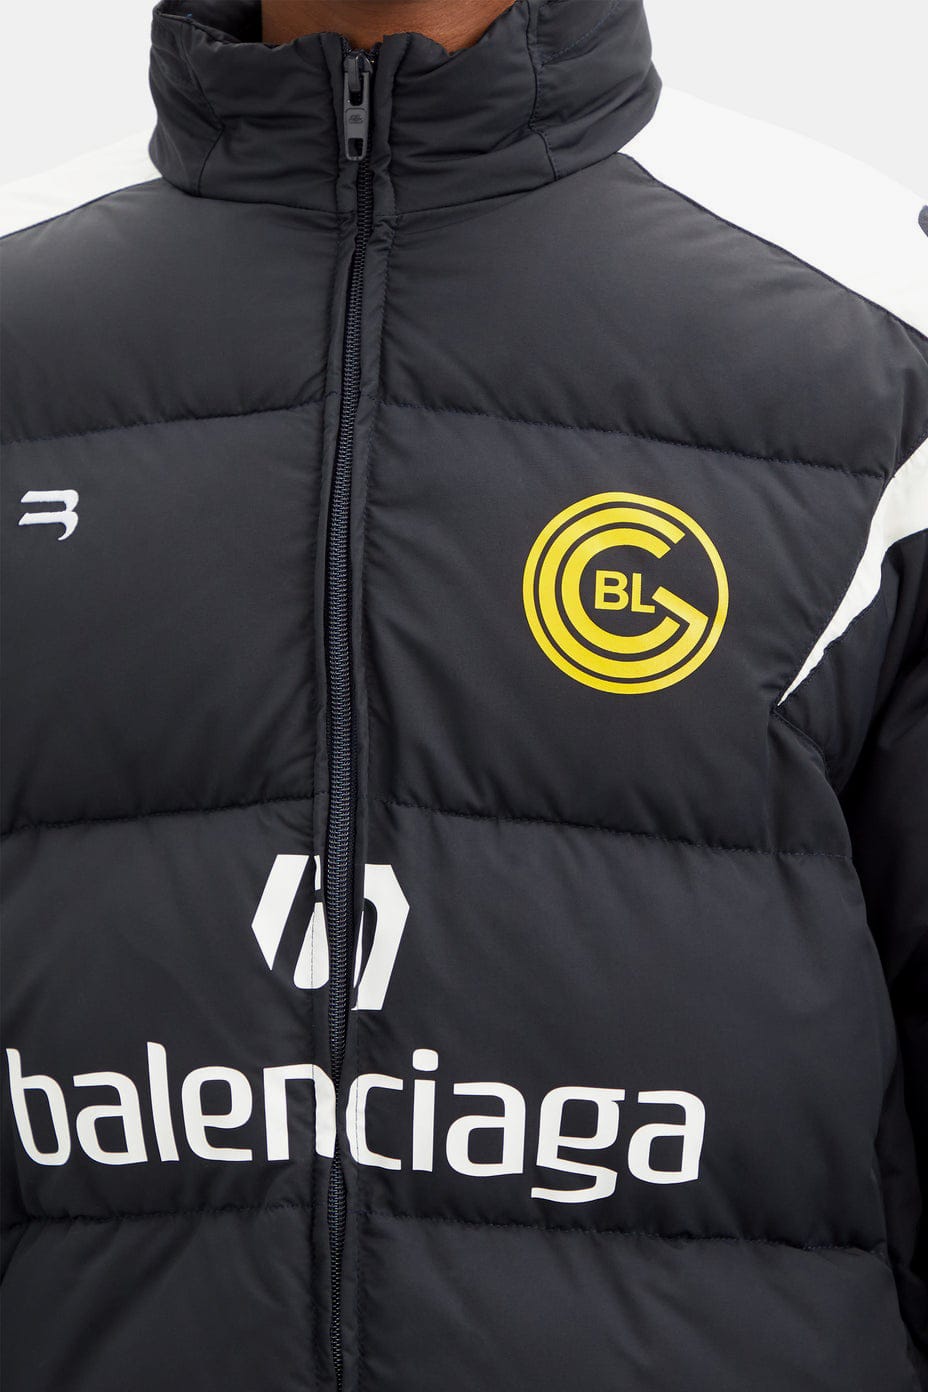 Balenciaga's Puffer Coat Is Football Gone Luxe | HYPEBEAST